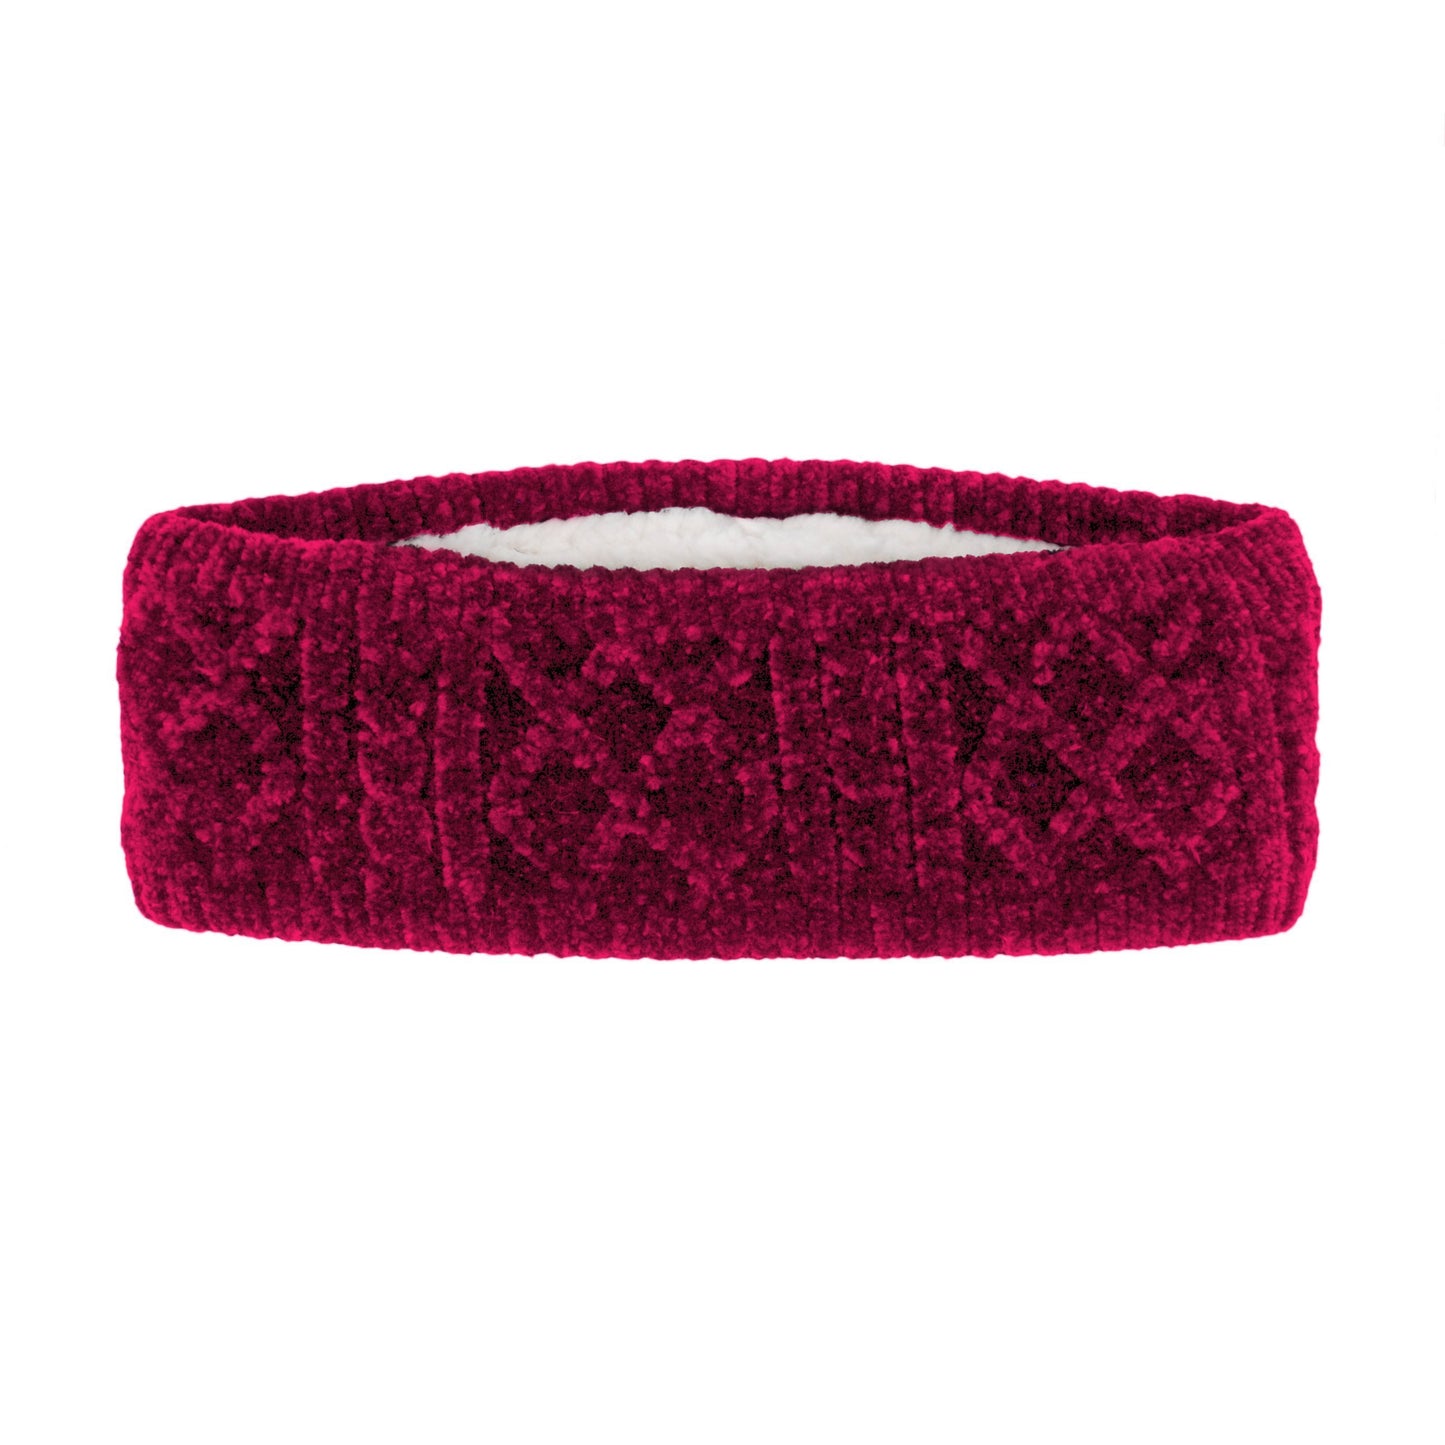 Pudus Raspberry Chenille Cable Knit Headband for Women - Ear Warmer, Winter Headband with Warm Faux Fur Fleece Lining 